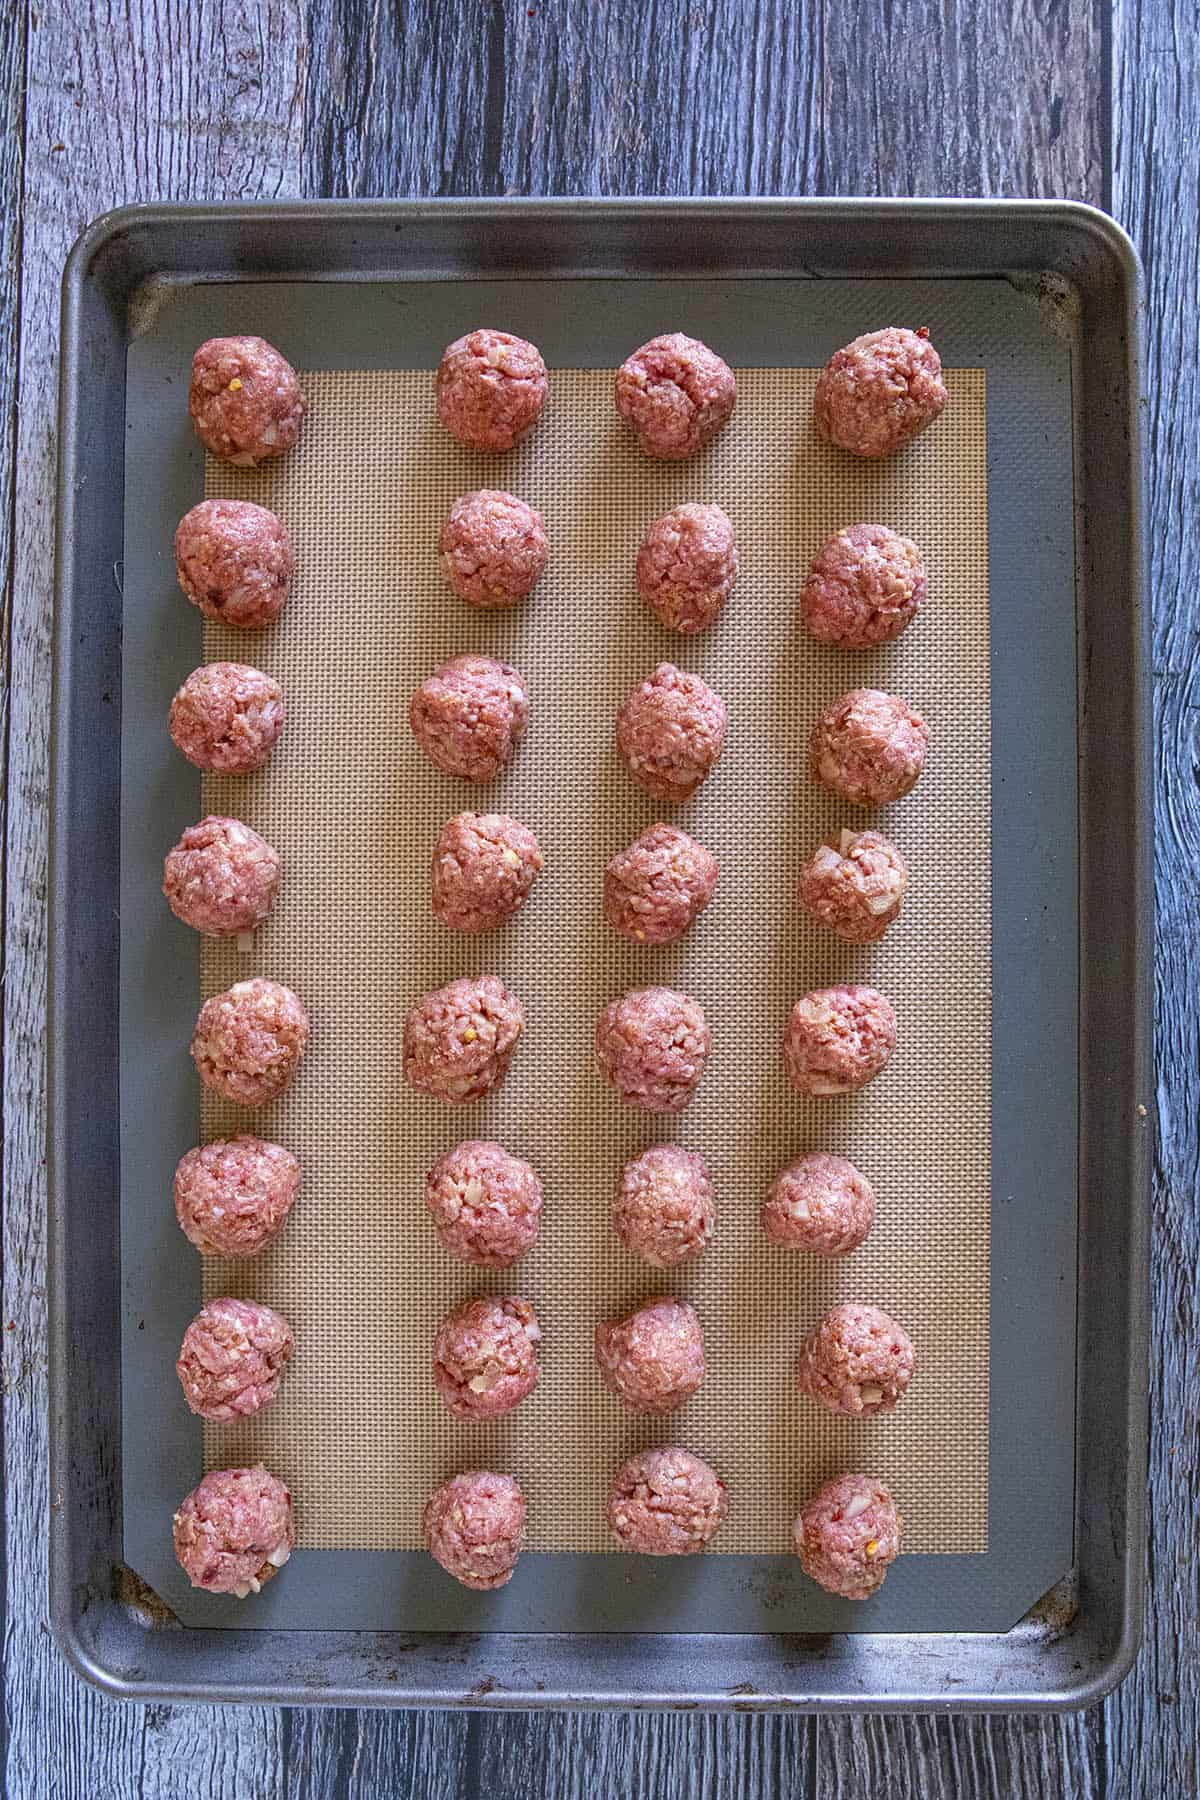 Meatballs on a baking sheet for making Grape Jelly Meatballs